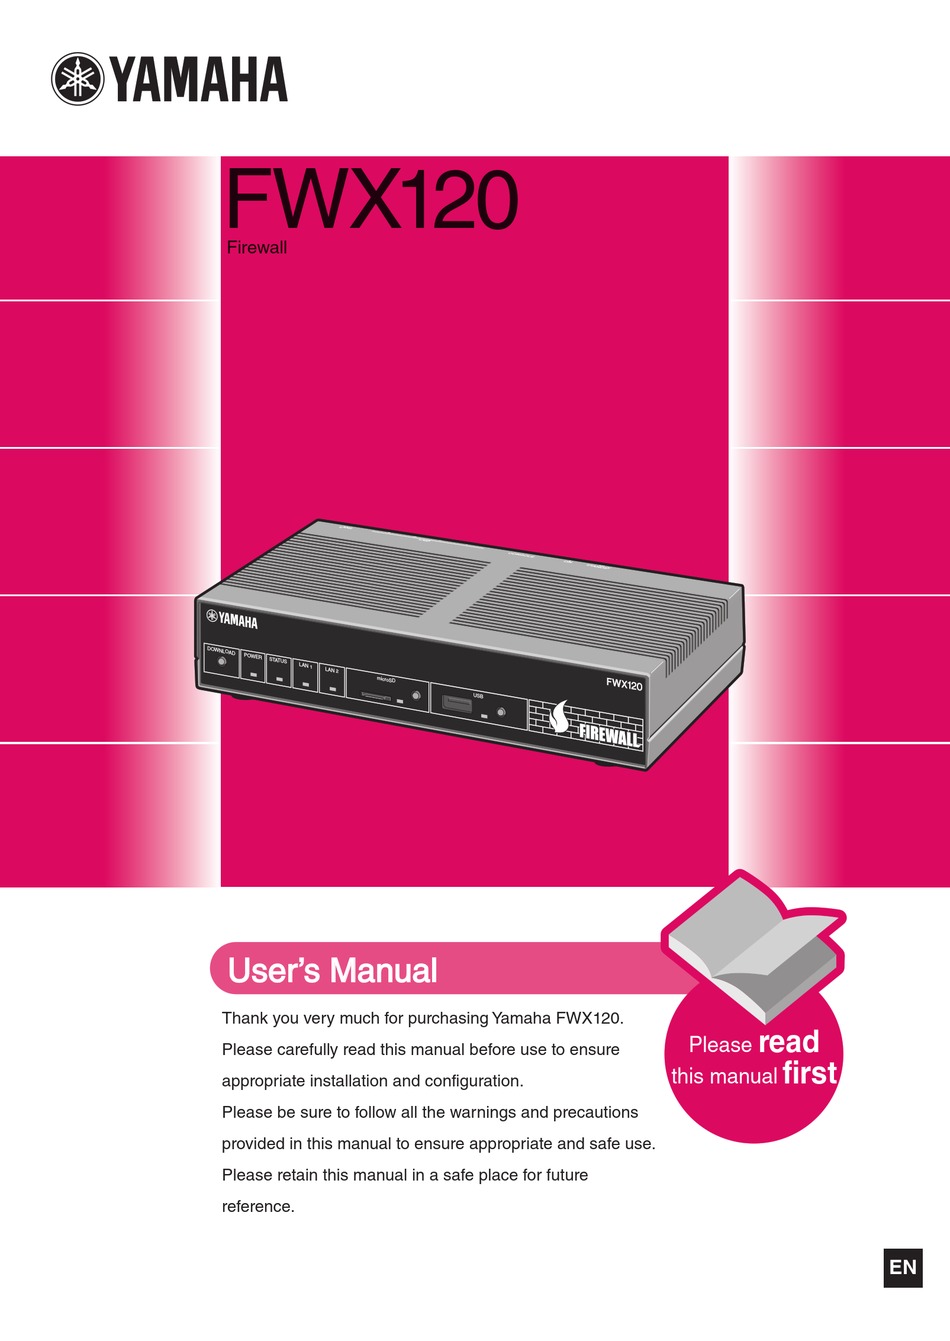 YAMAHA FWX120 USER MANUAL Pdf Download | ManualsLib